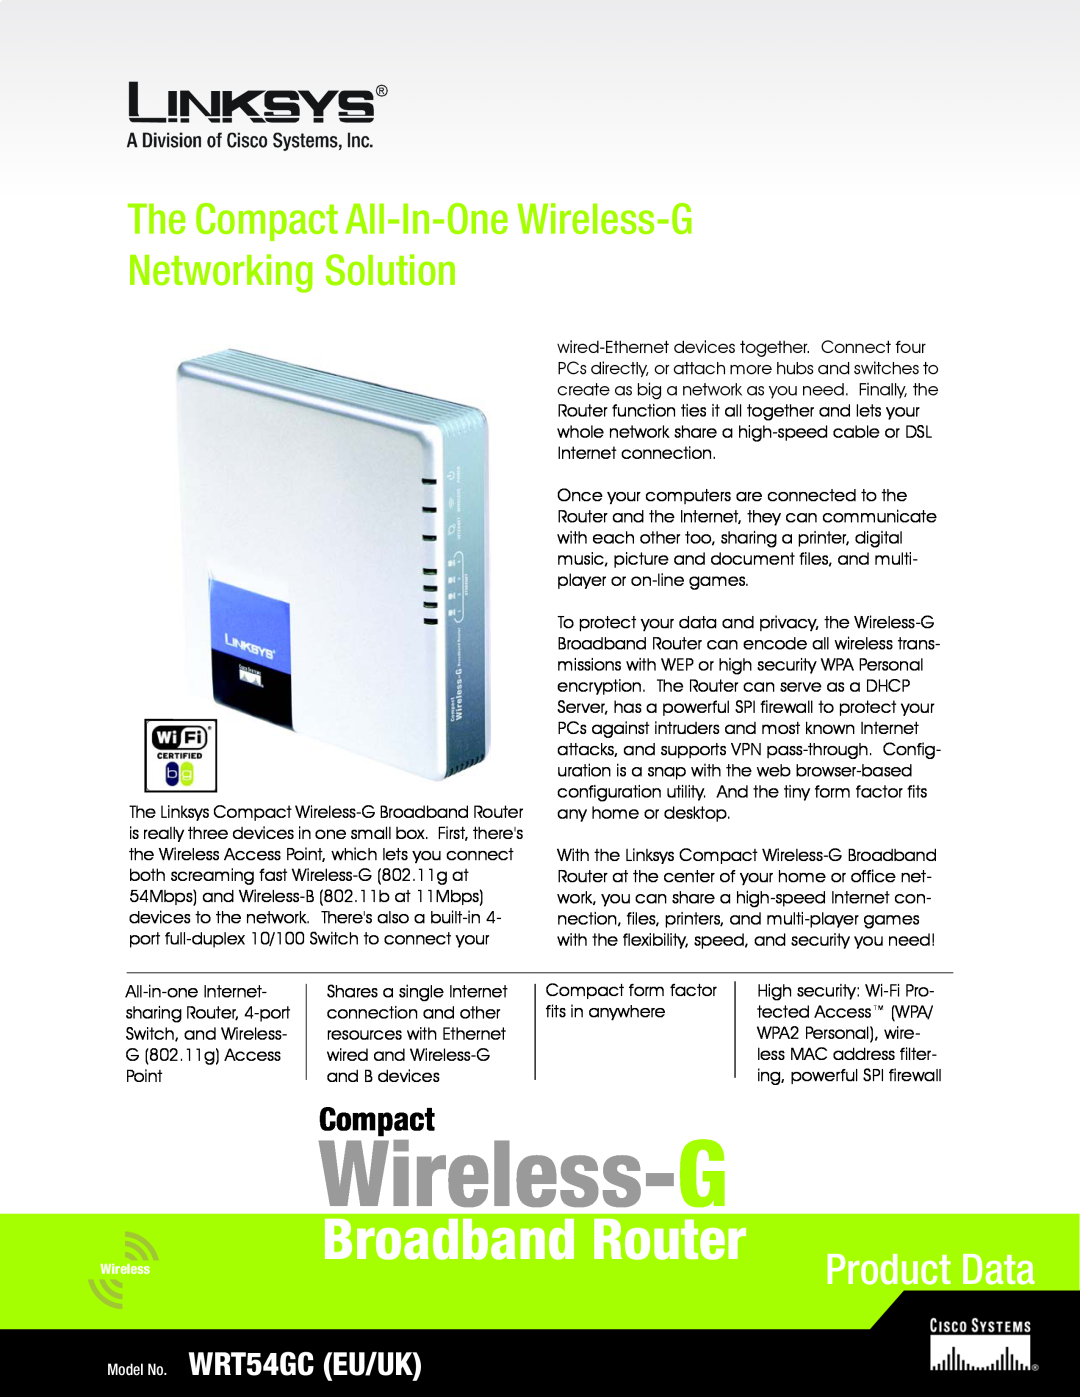 Linksys manual Model No. WRT54GC EU/UK, Wireless-G, Broadband Router, Product Data, Compact 